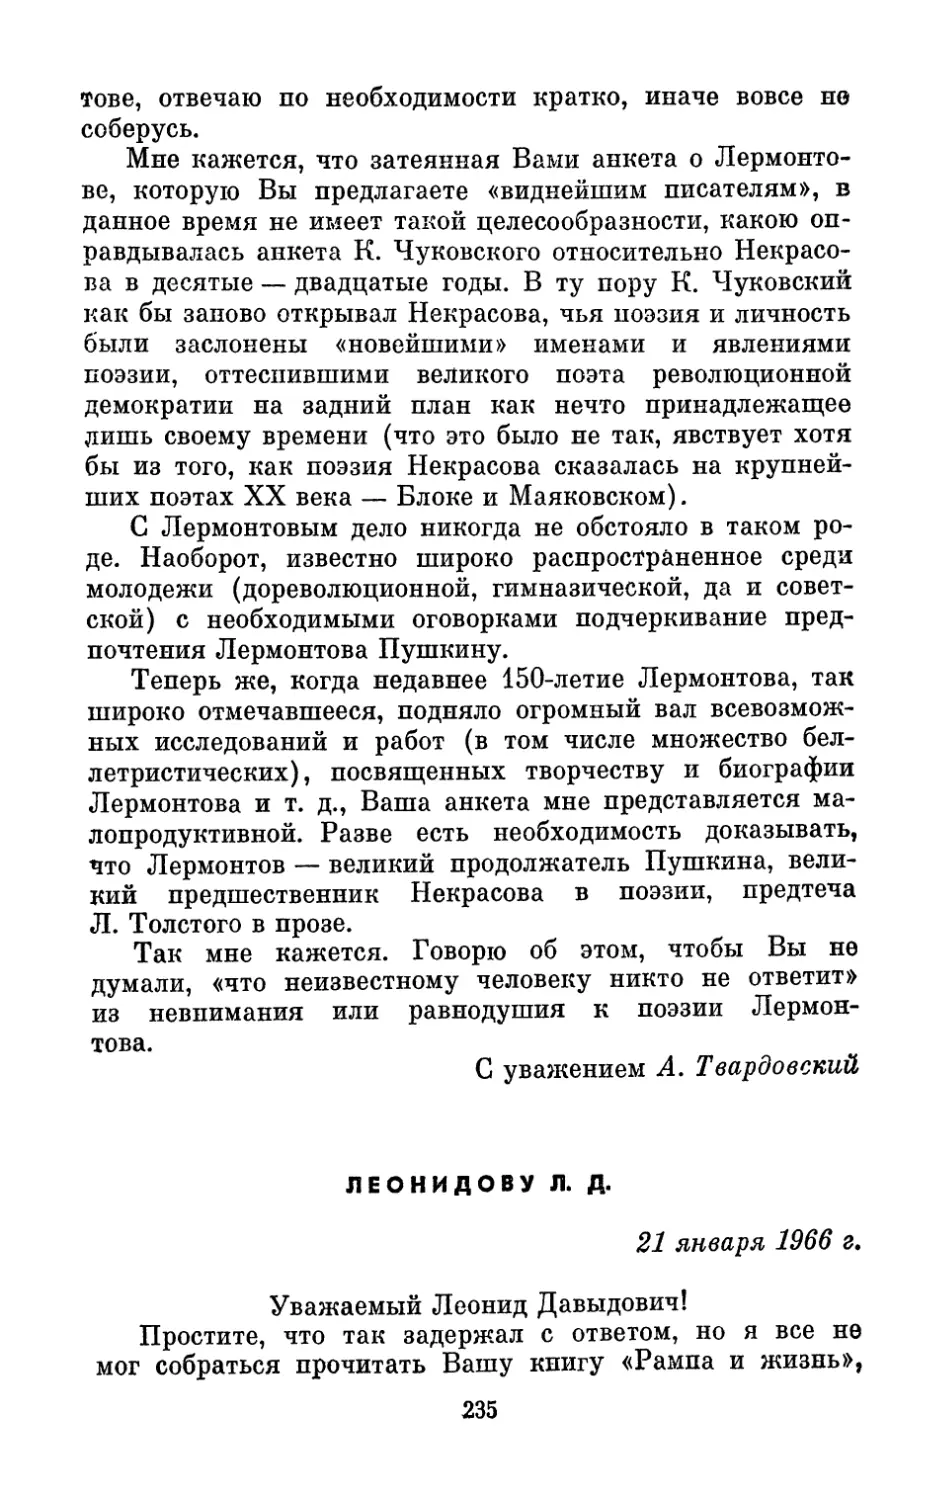 Леонидову Л. Д., 21 января 1966 г.